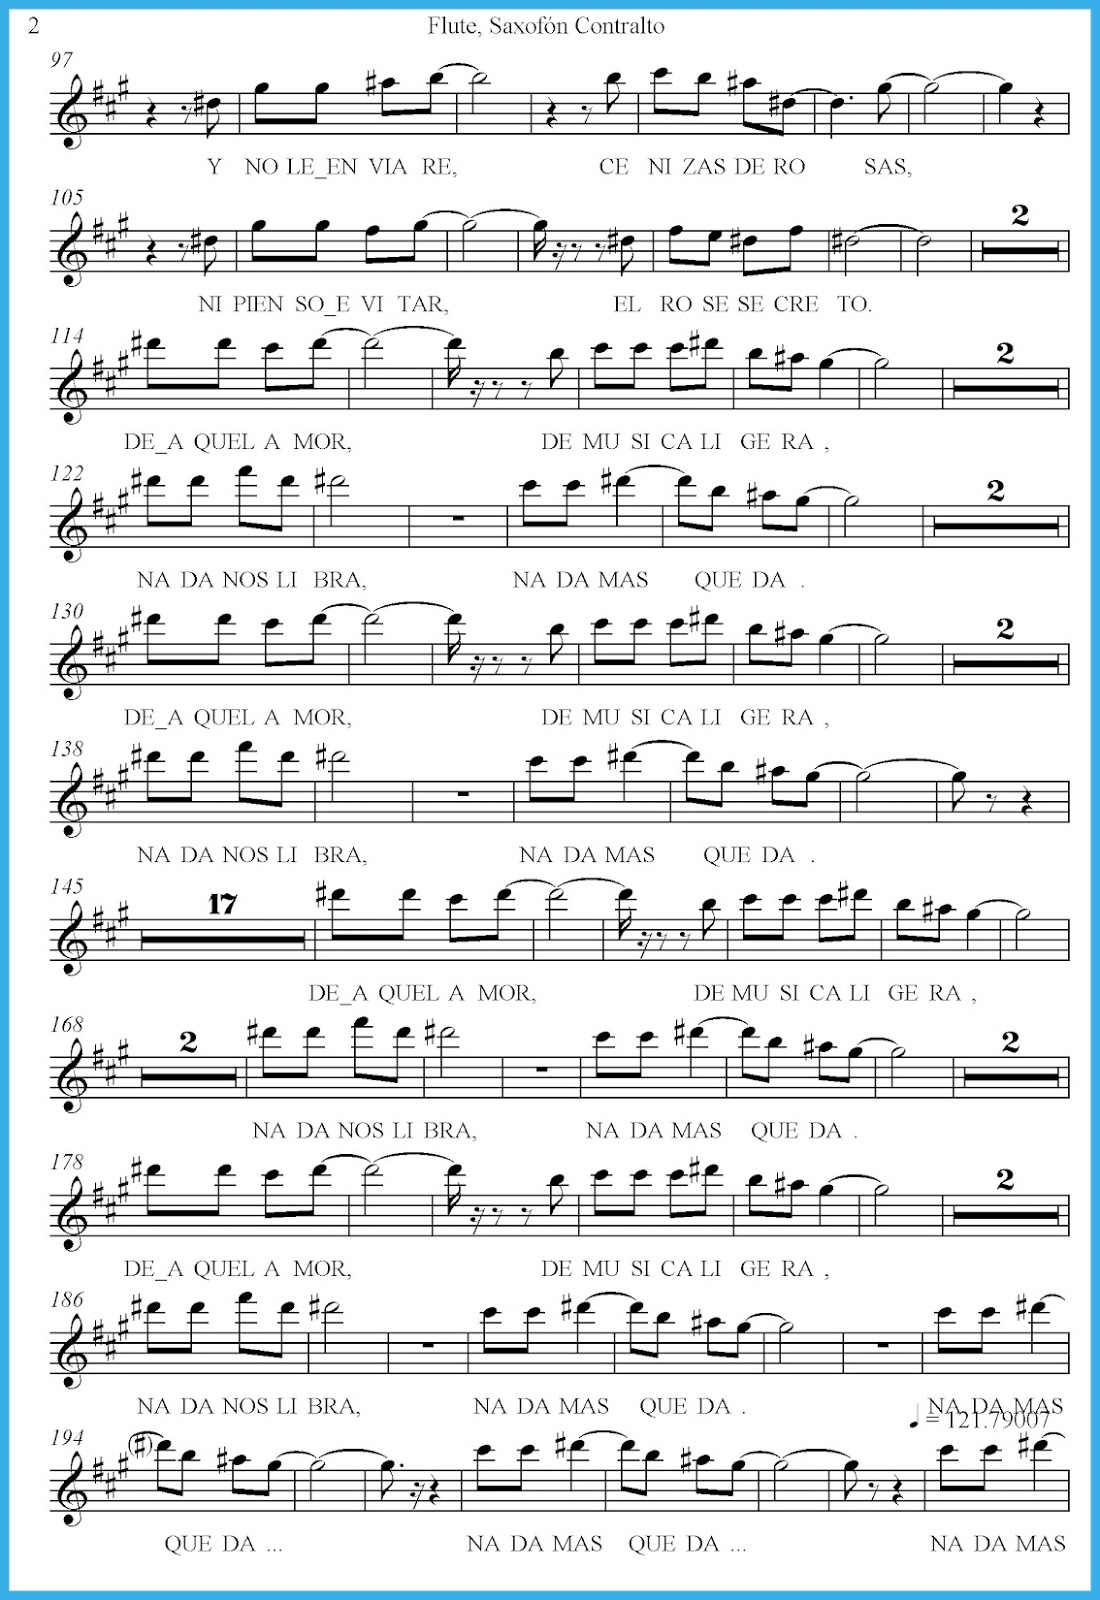 Partitura de De Musica Ligera para saxo (version merengue) - Partituras